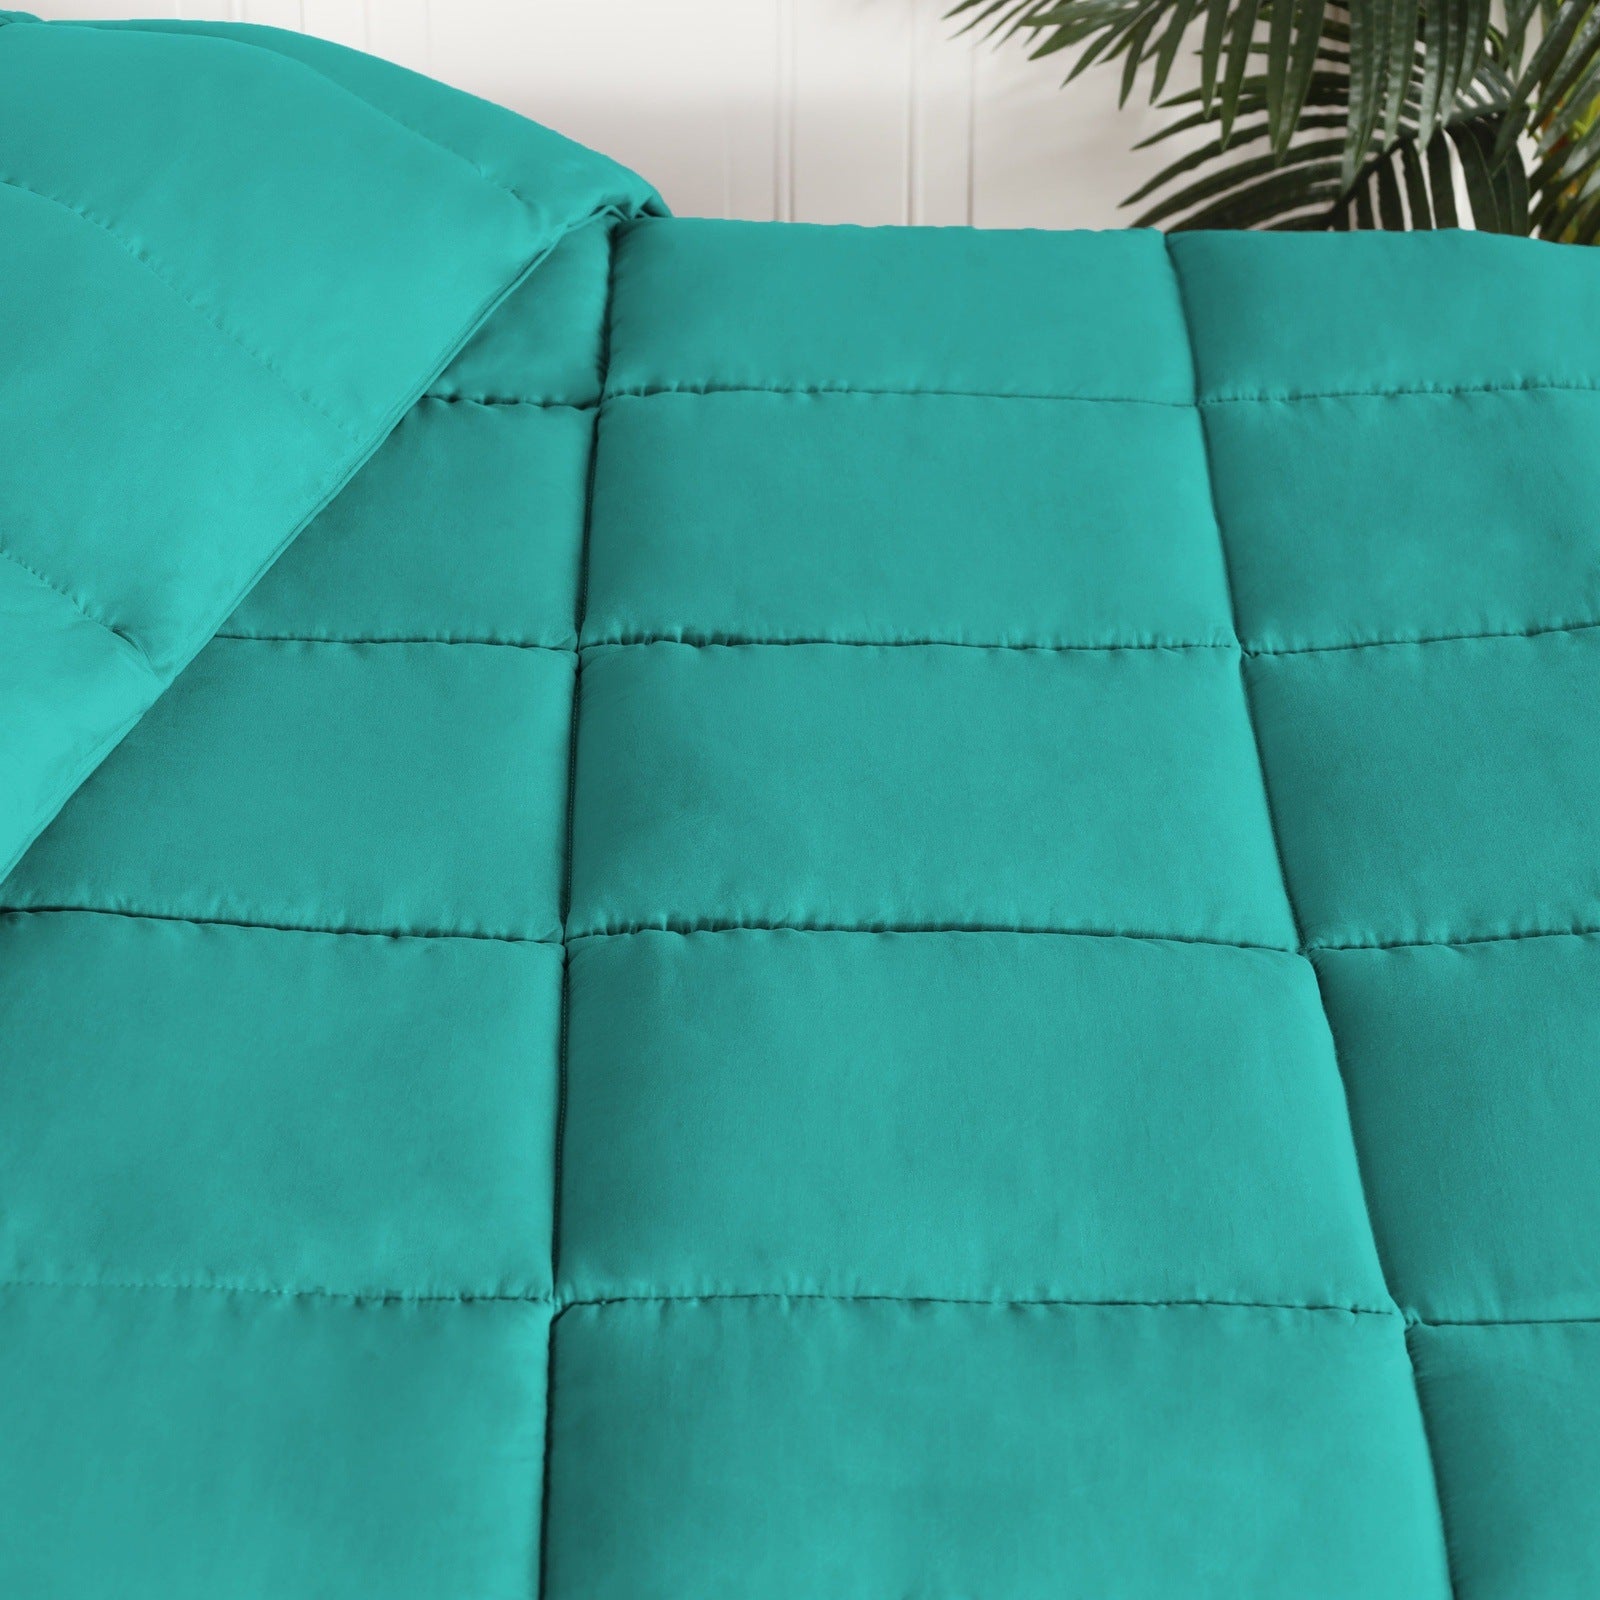  Superior Solid All Season Down Alternative Microfiber Comforter - Turquoise